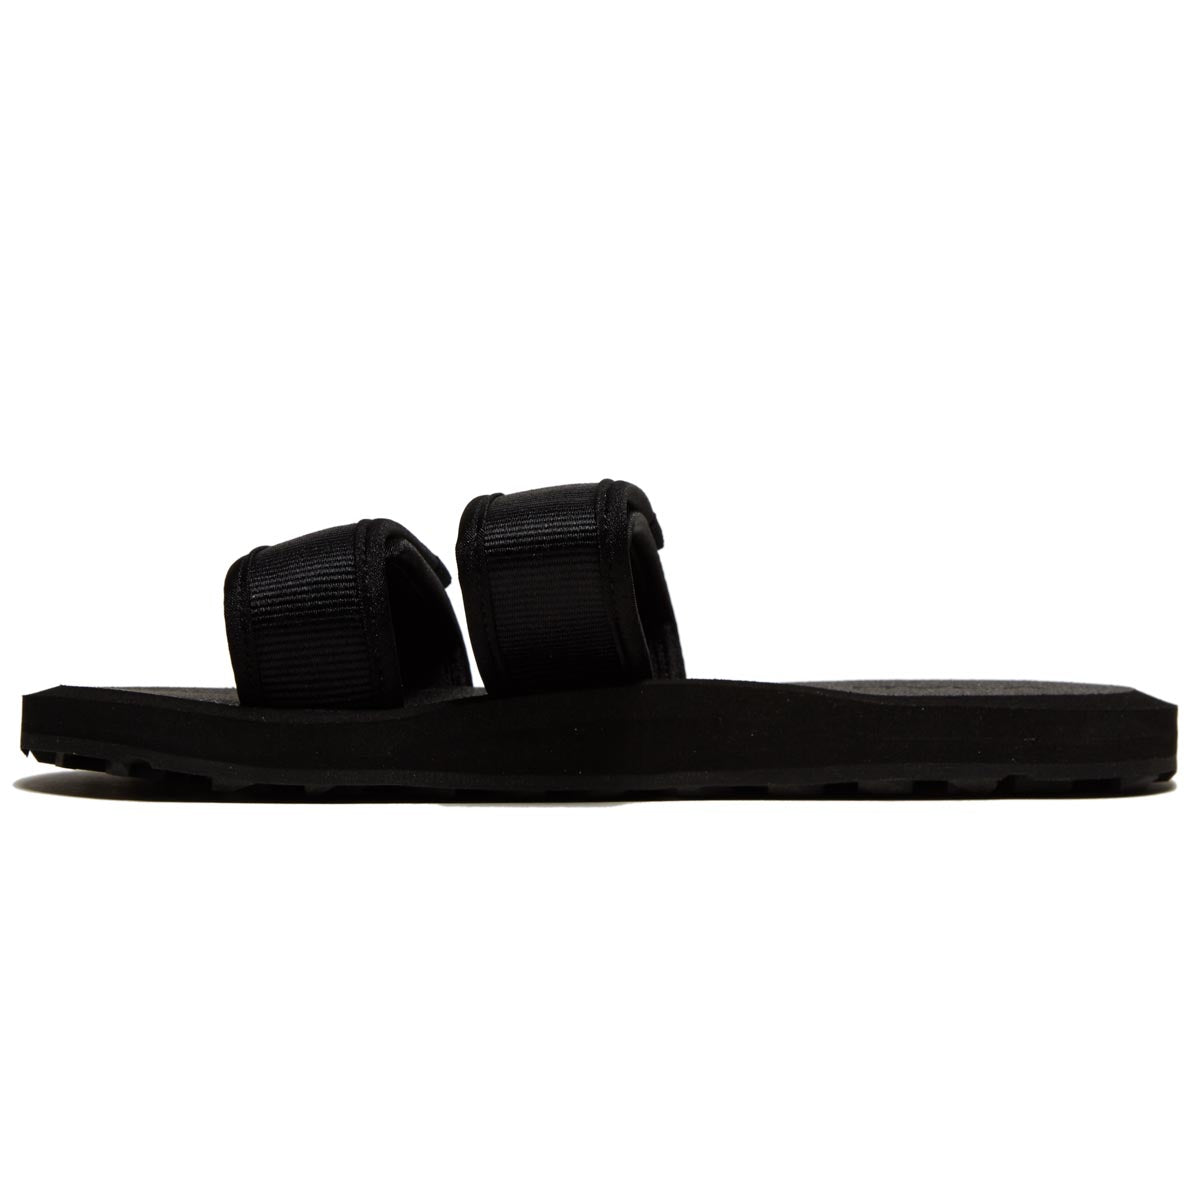 RVCA Peak Sandal Shoes - Black image 2